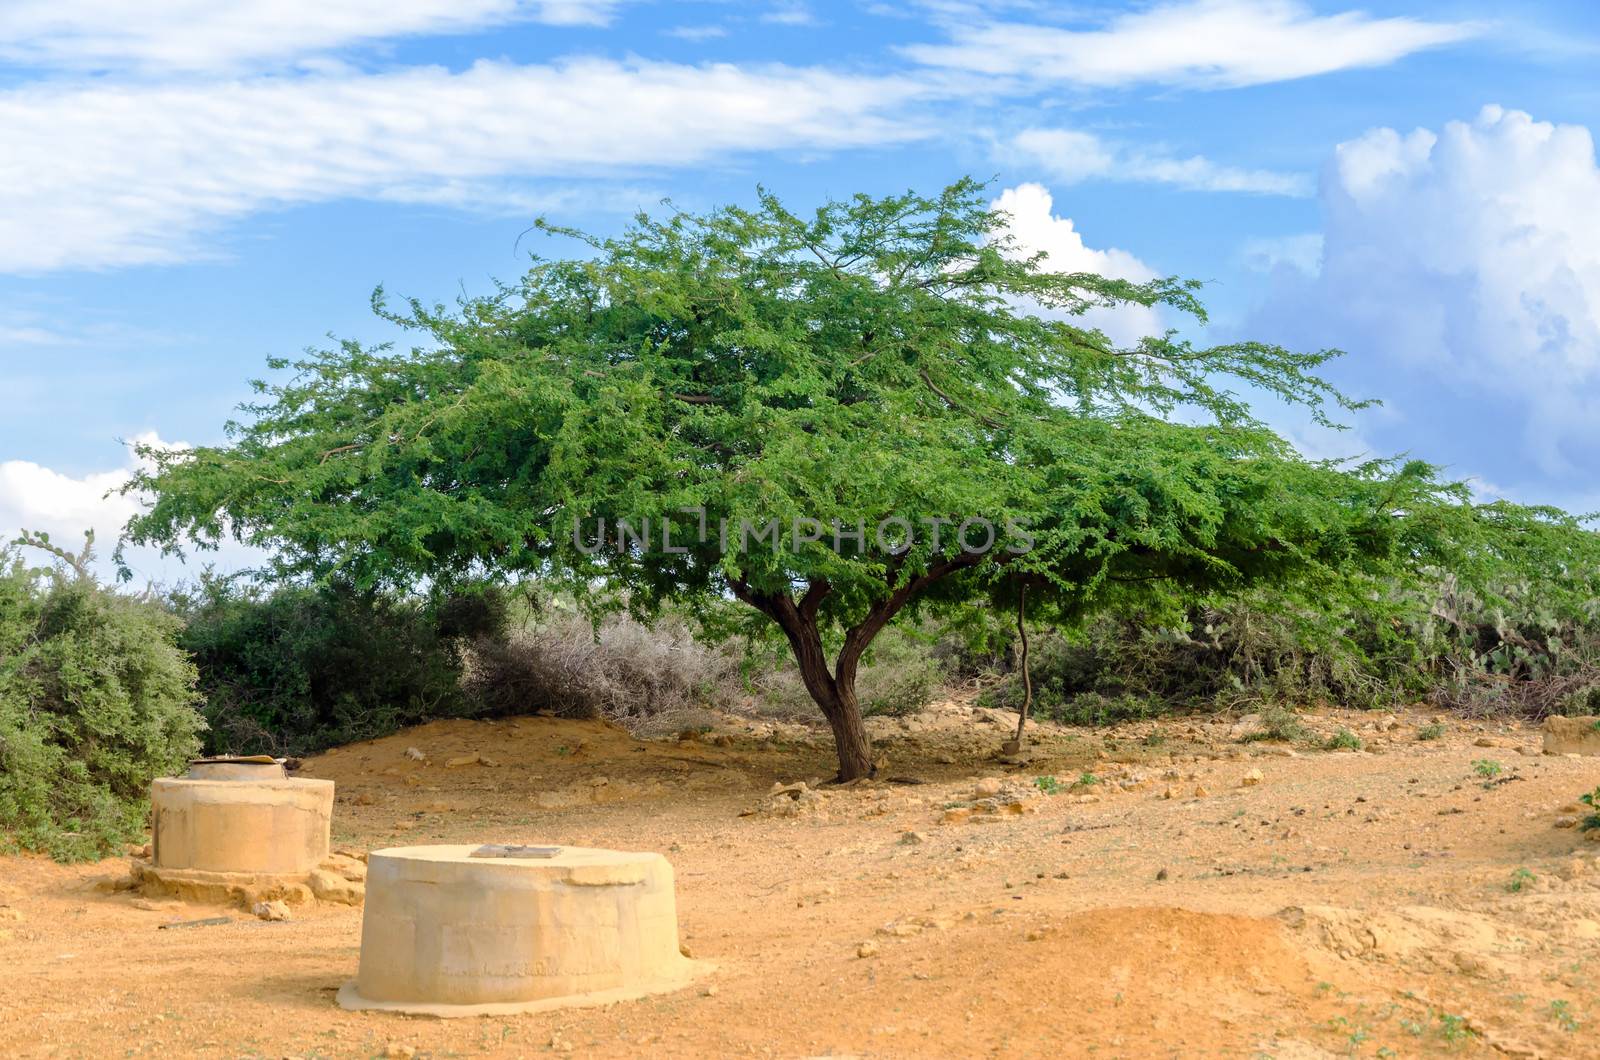 Wells in a desert region of Colombia used by the indigenous Wayuu for water in La Guajira